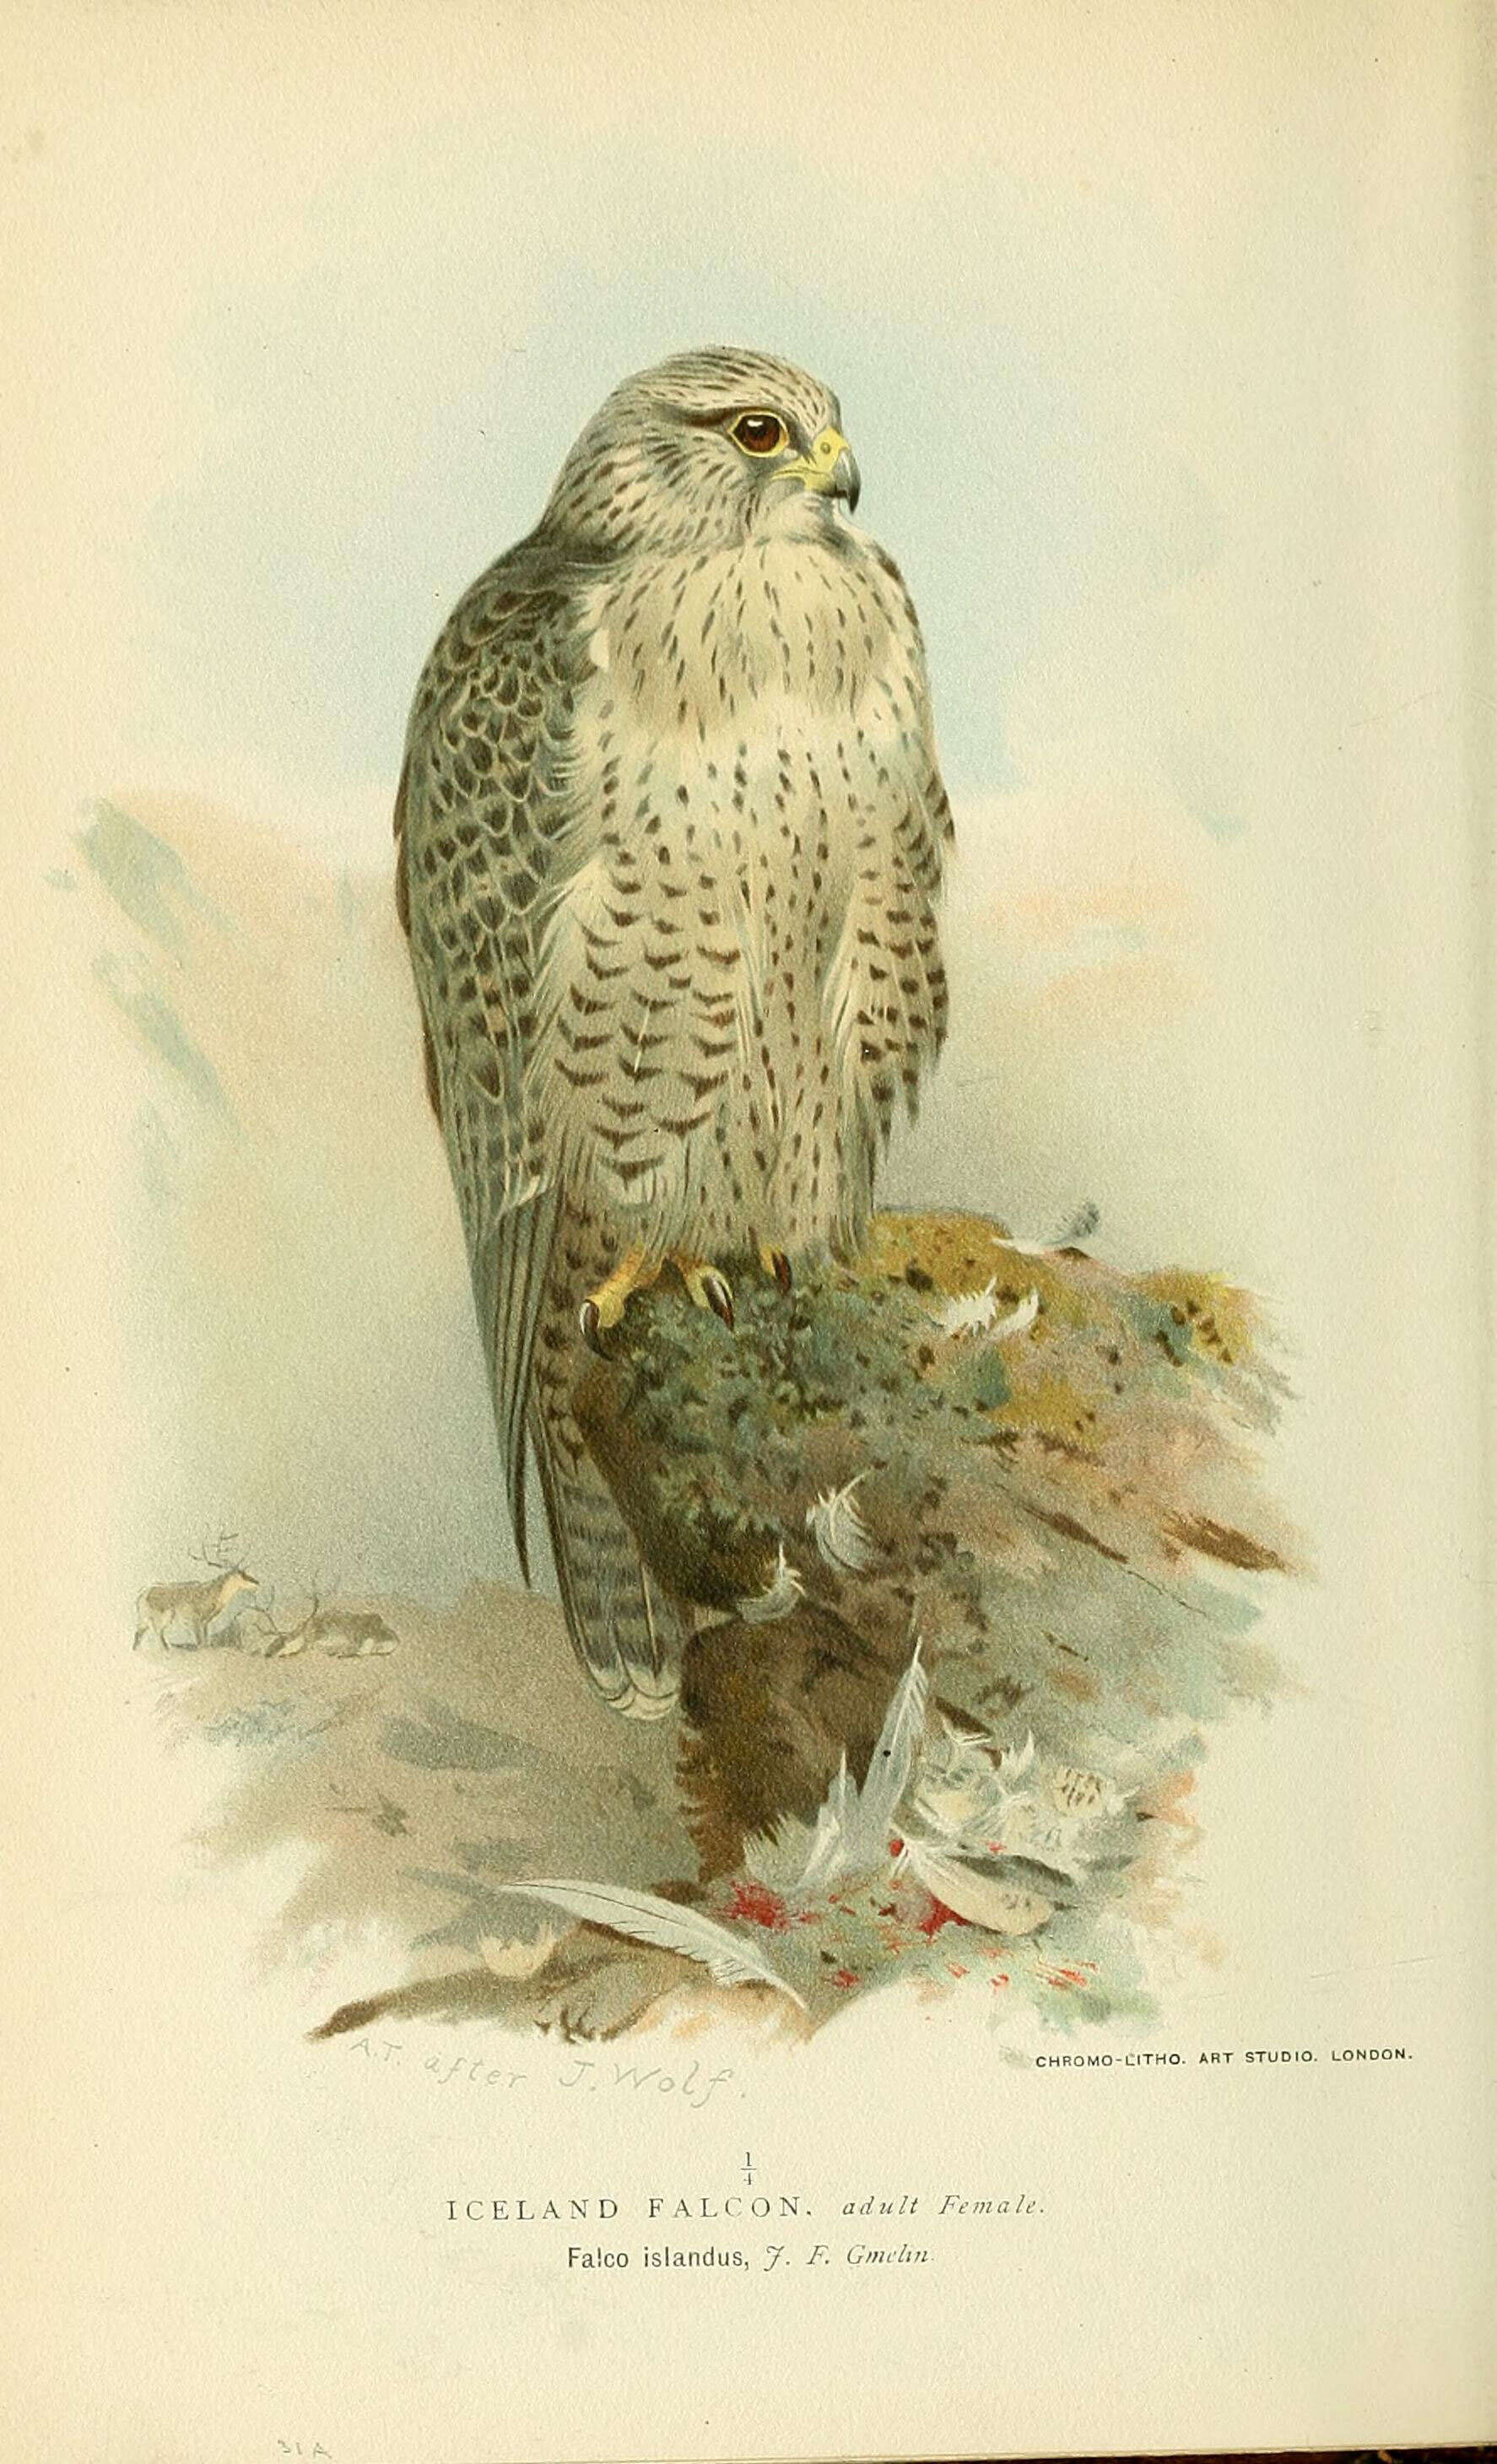 Image of Gyr Falcon